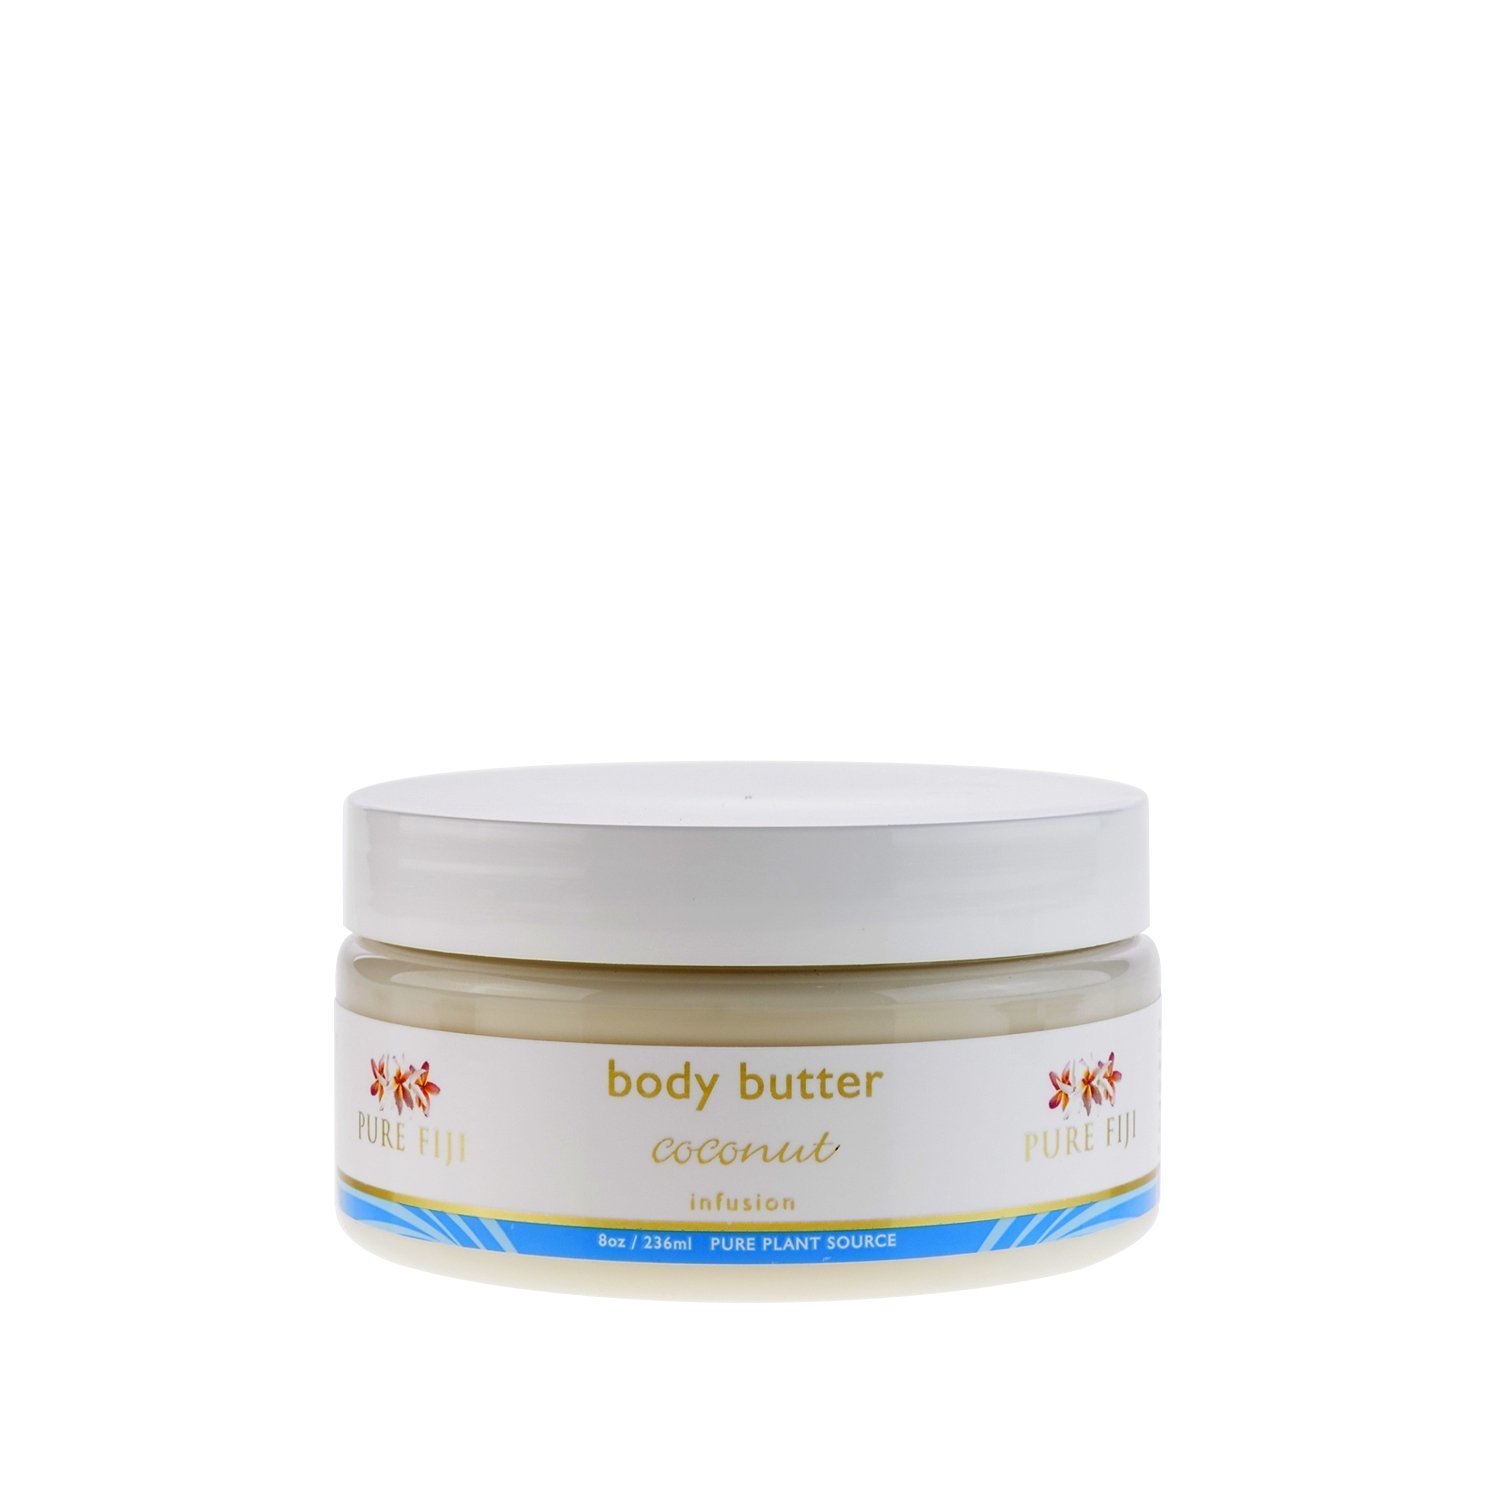 PURE FIJI Body Butter - Moisturizer Body Cream - Face Cream and Body Lotion for Dry Skin with Natural Oils & Vitamin E,Coconut, 8oz